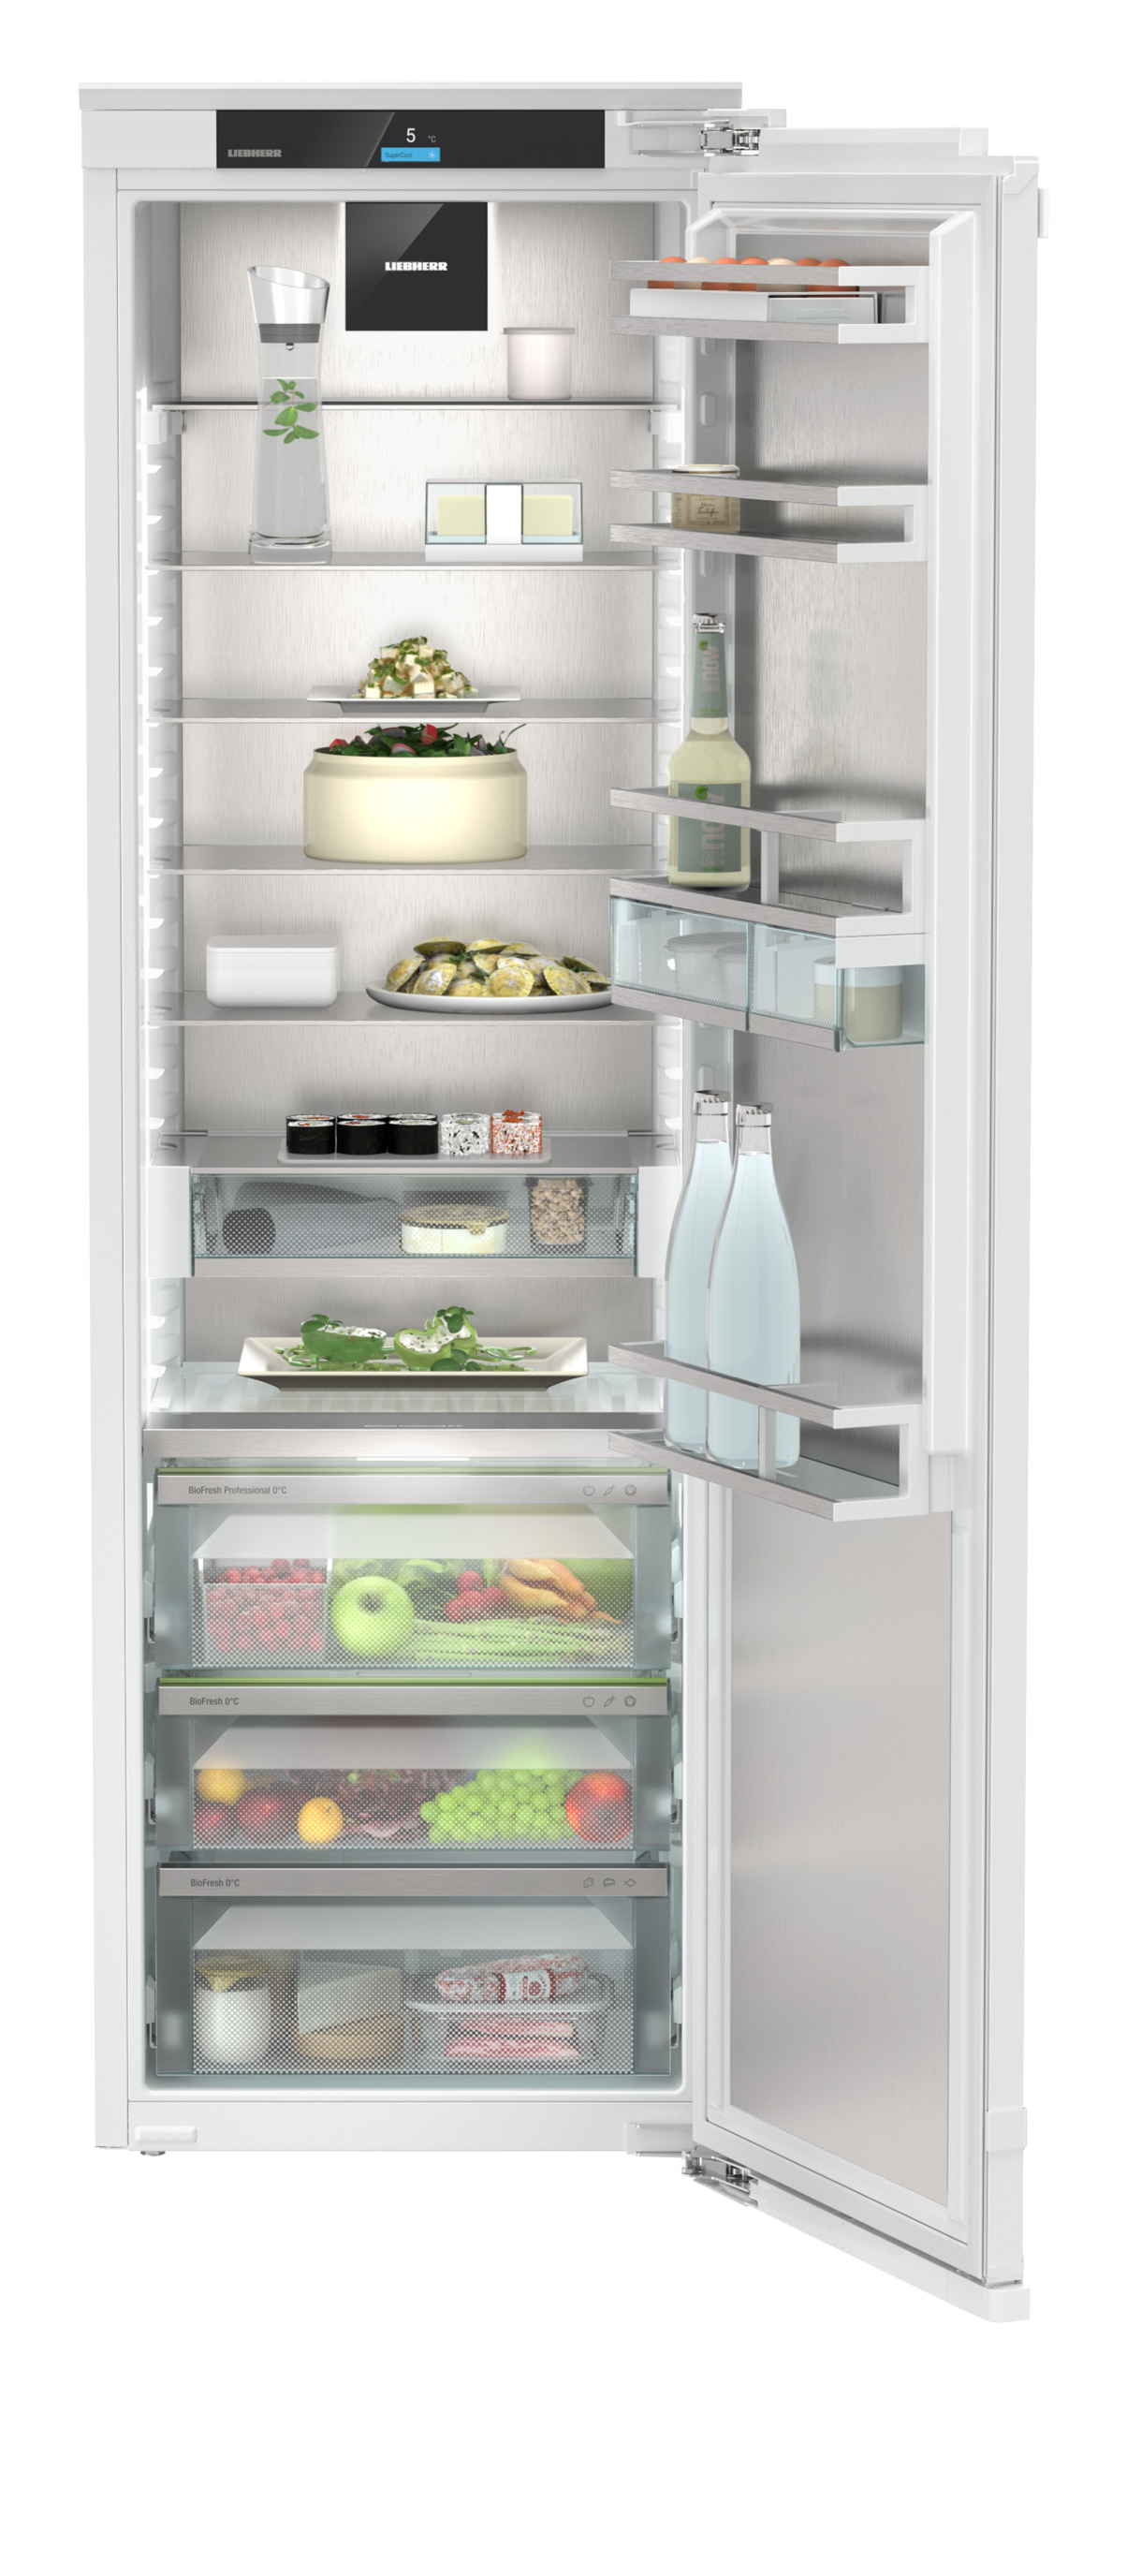 Fully integrated AutoDoor refrigerators